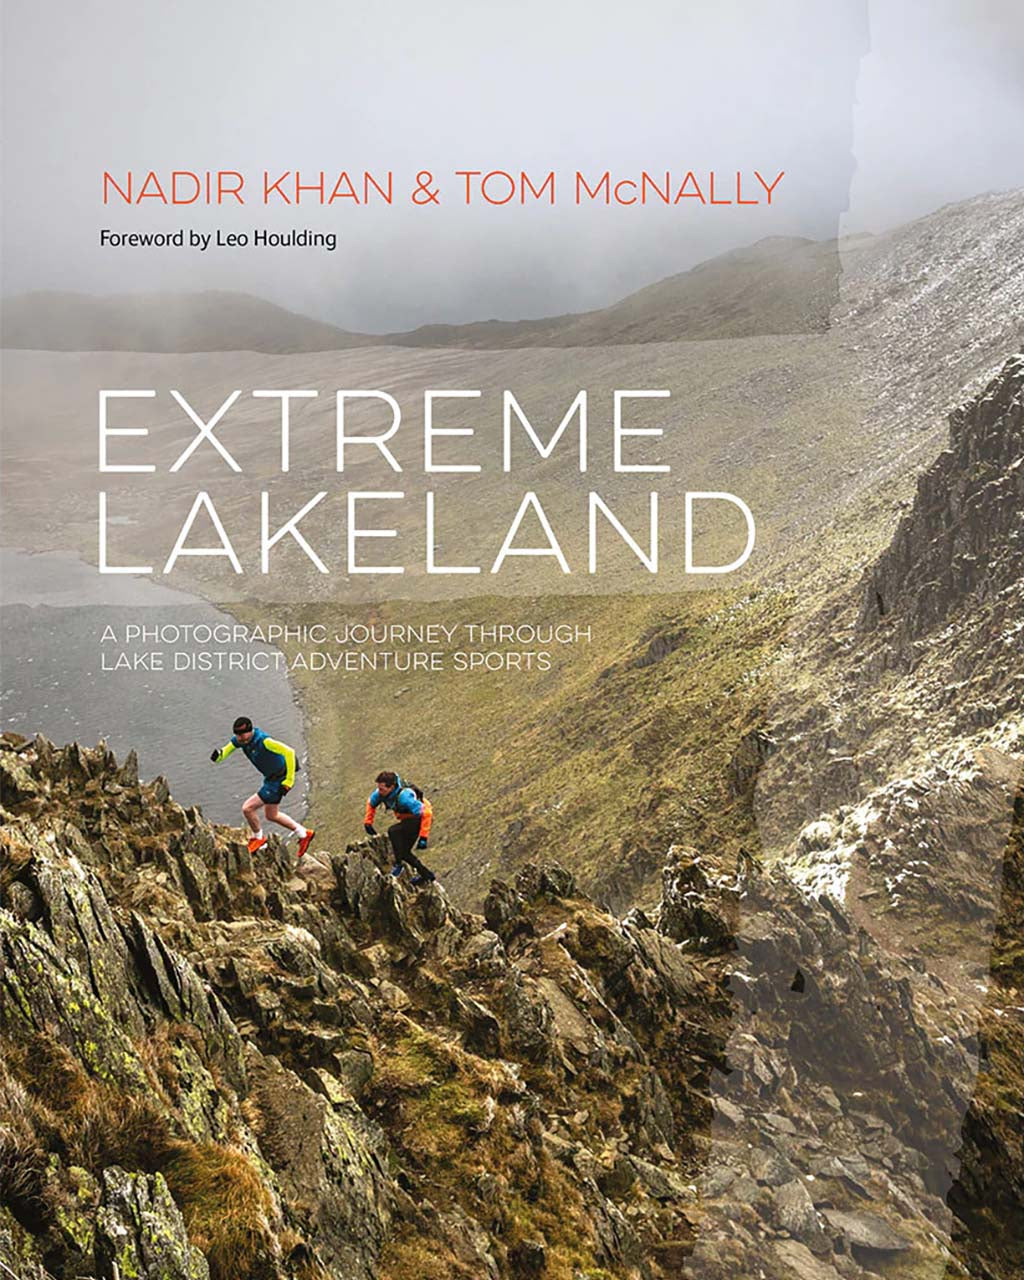 Extreme Lakeland by Nadir Khan & Tom McNally